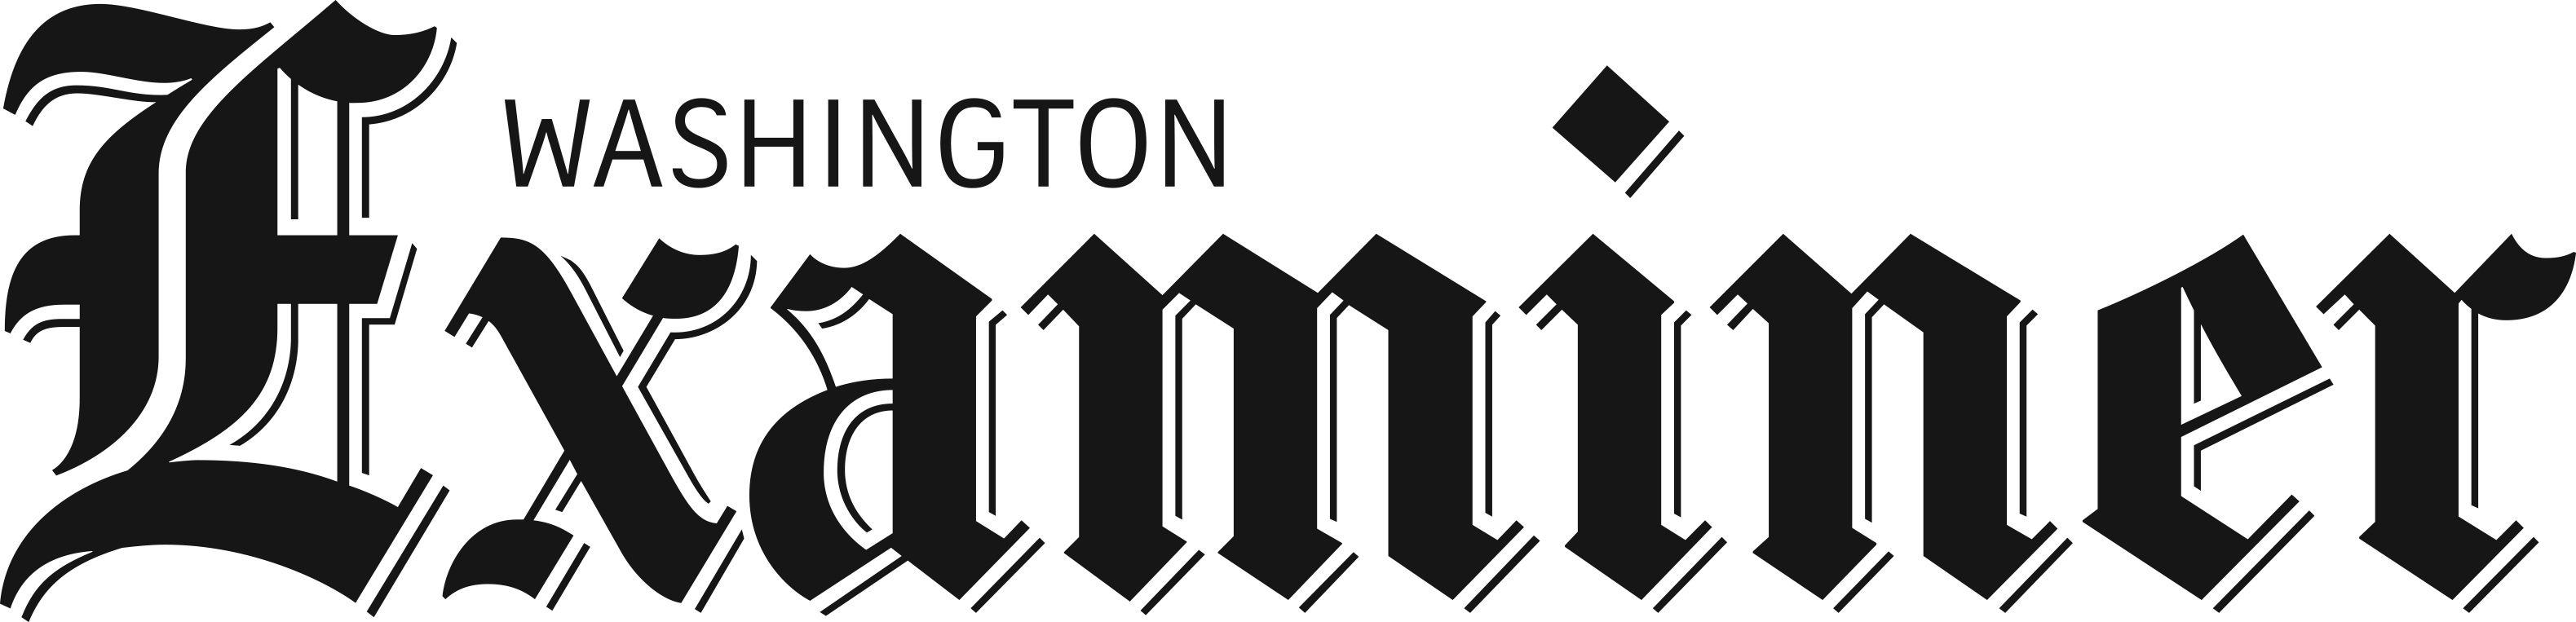 Examiner.com Logo - Washington Examiner: Political News and Analysis About Congress